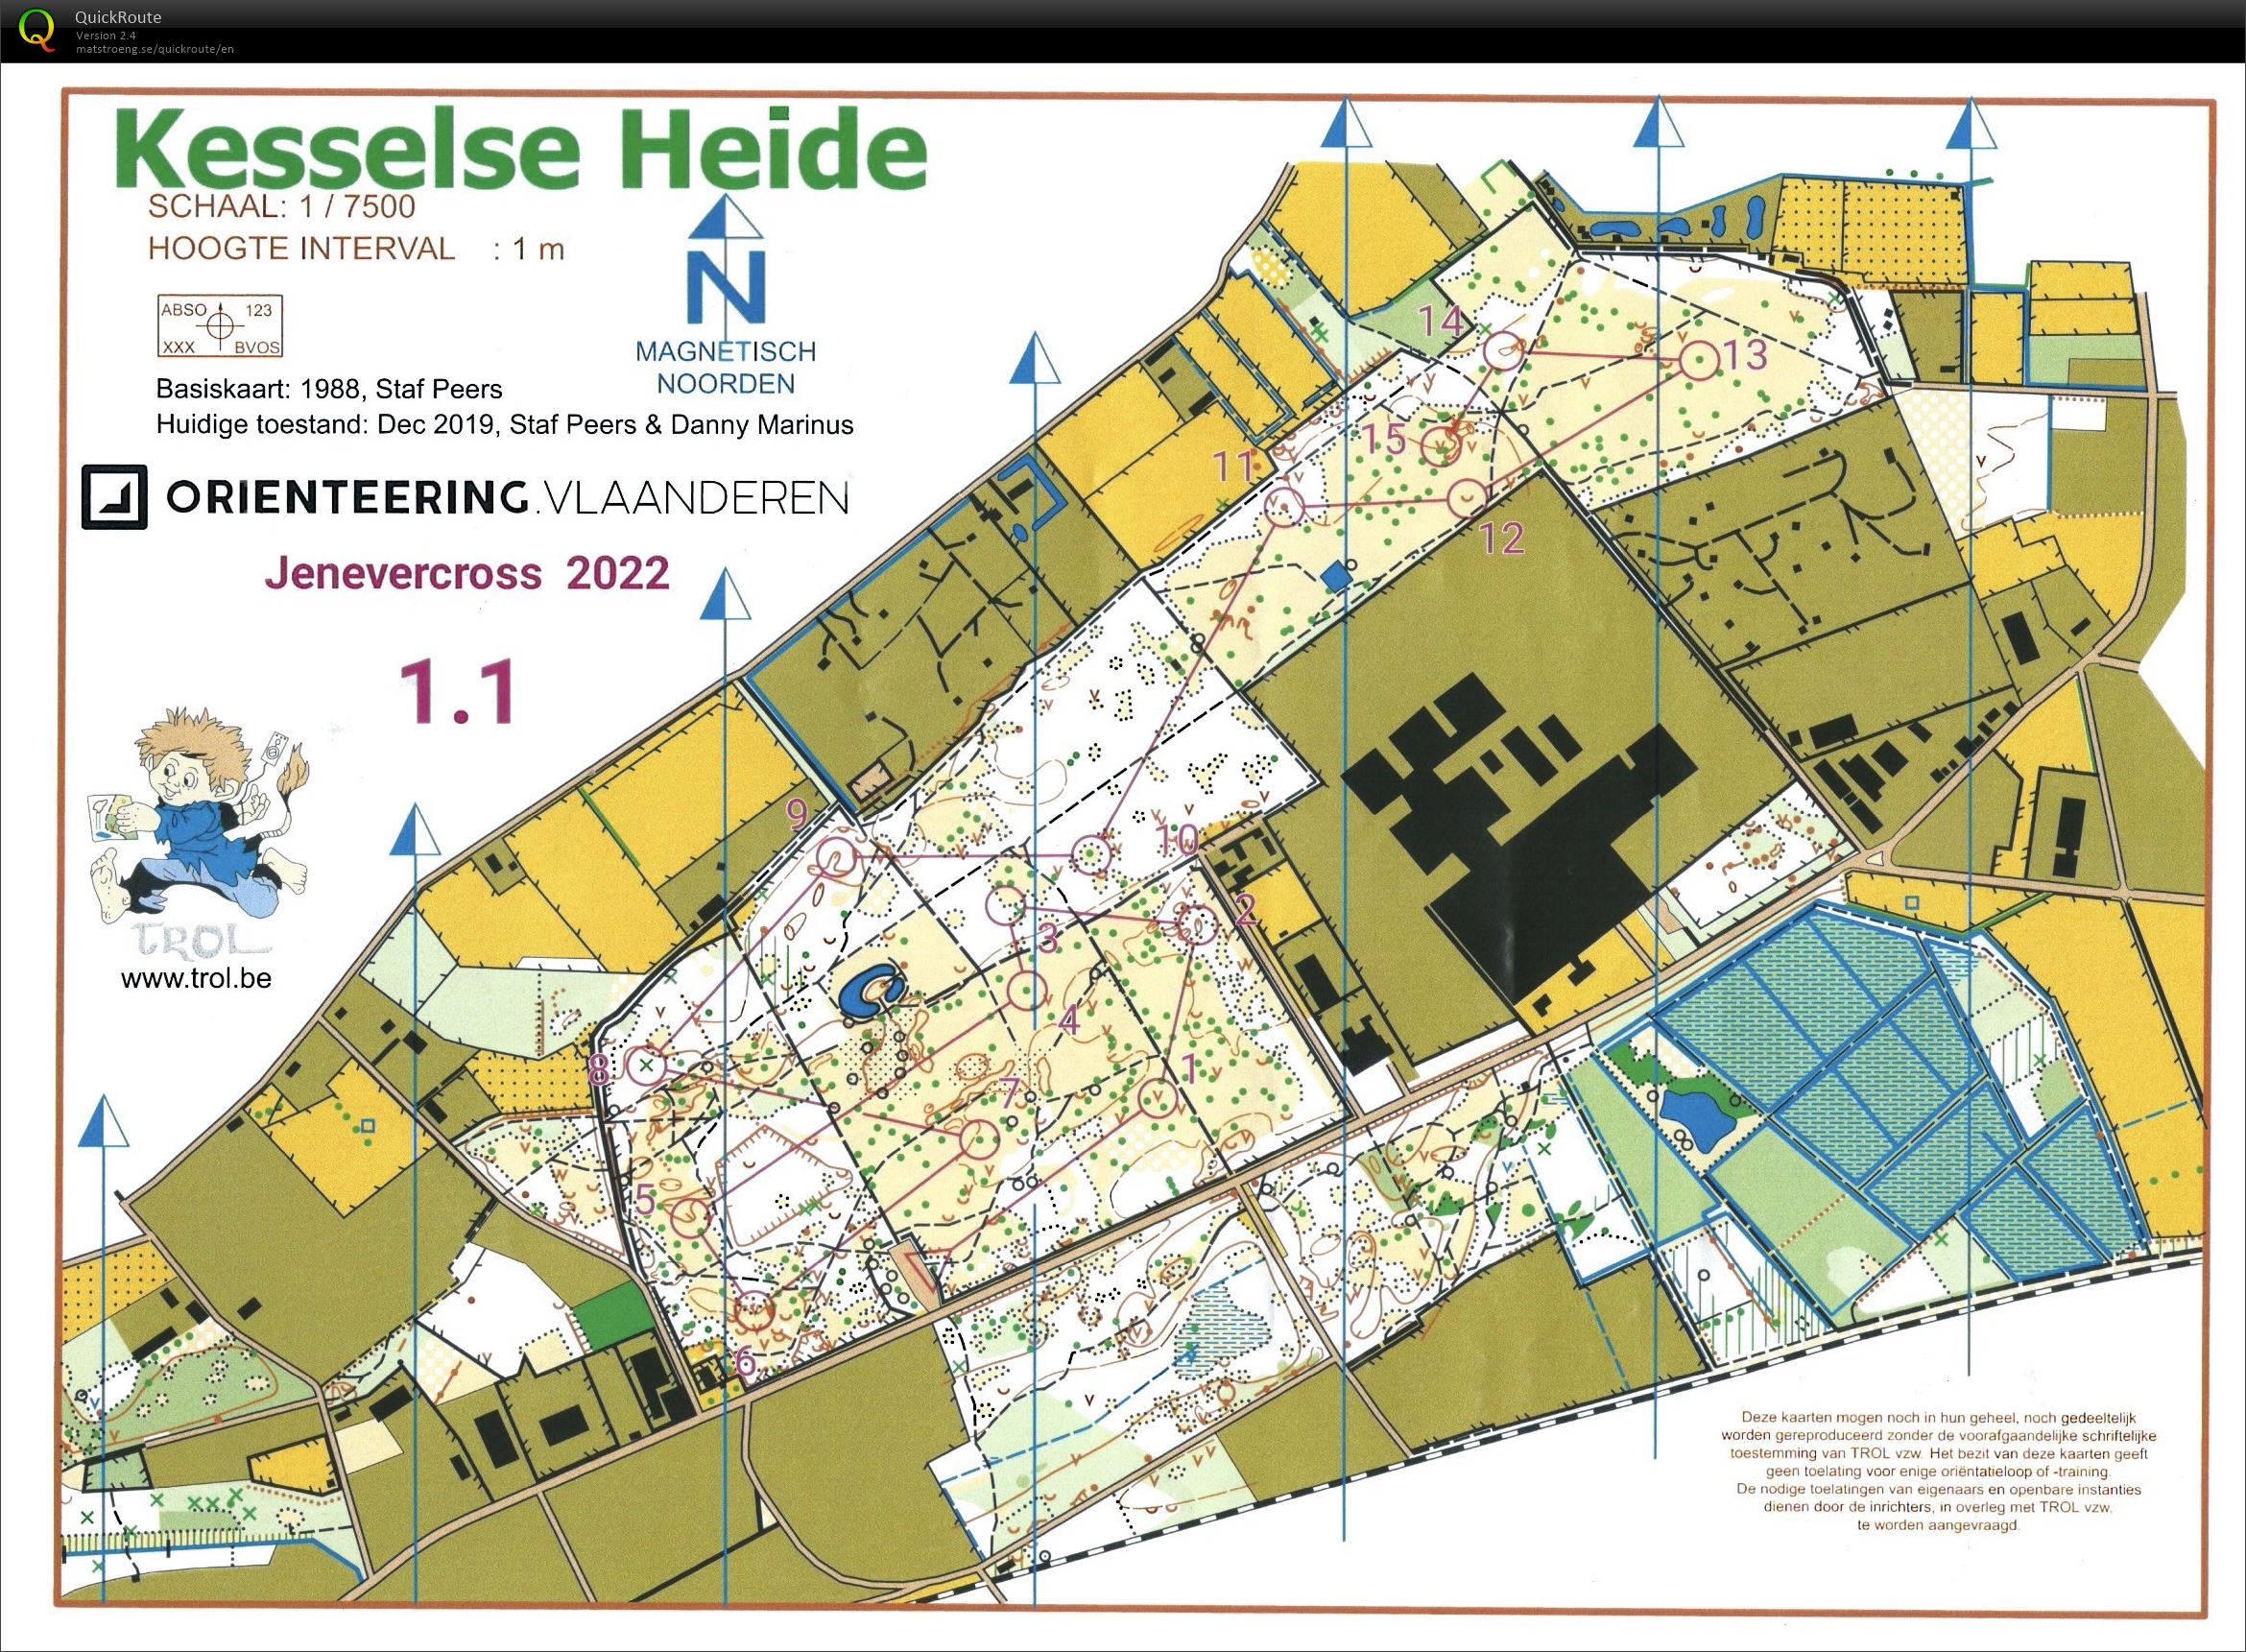 Jenevercross 2022 - Kesselse Heide - 1.1 (07-01-2022)